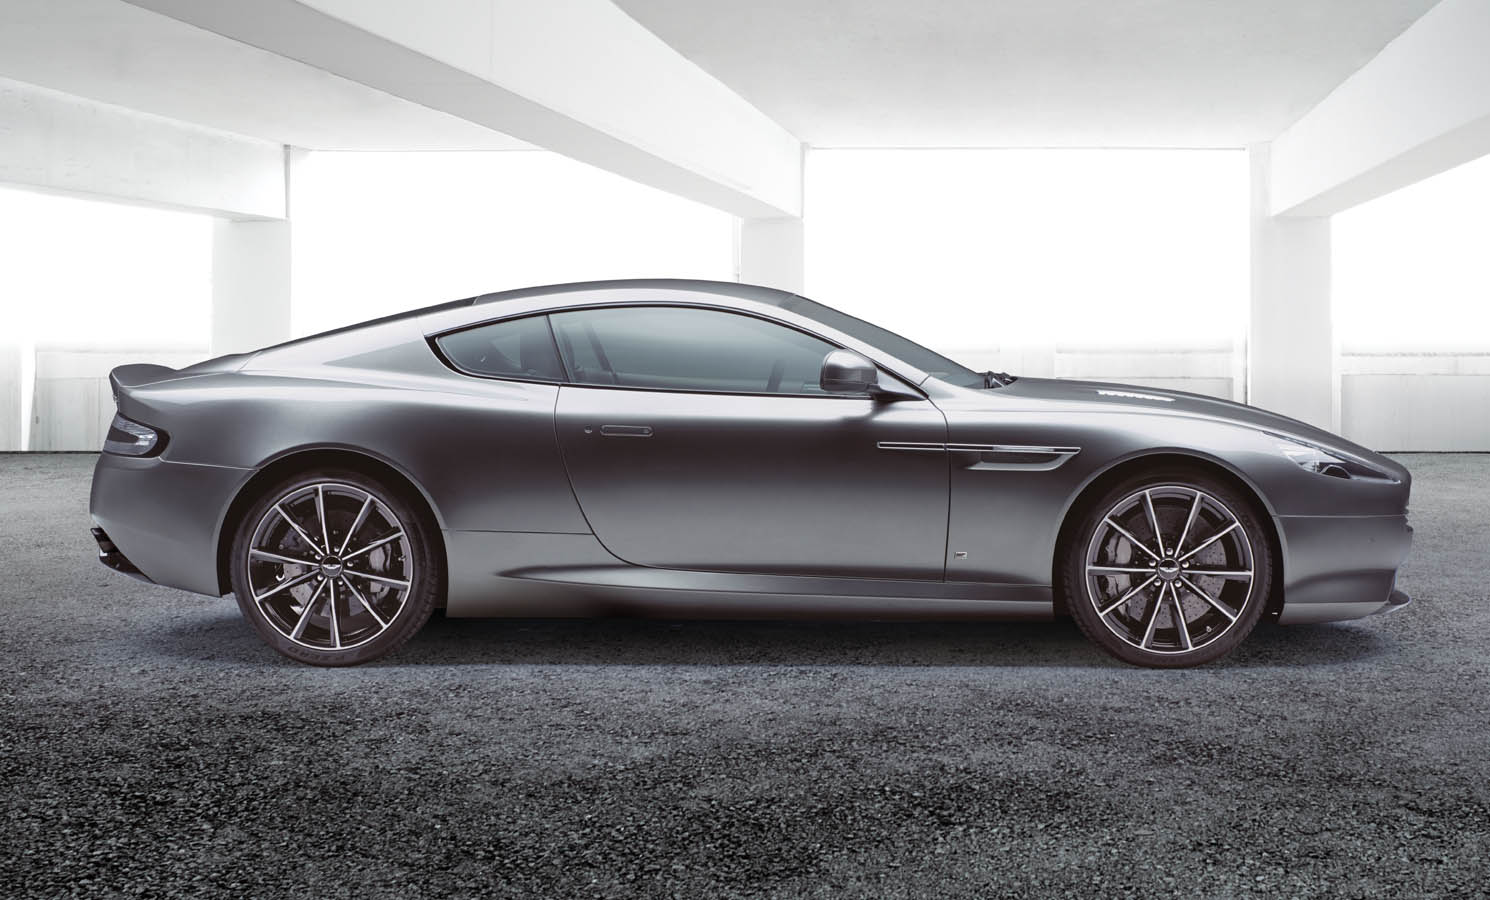 Aston Martin DB9 HD wallpapers, Desktop wallpaper - most viewed